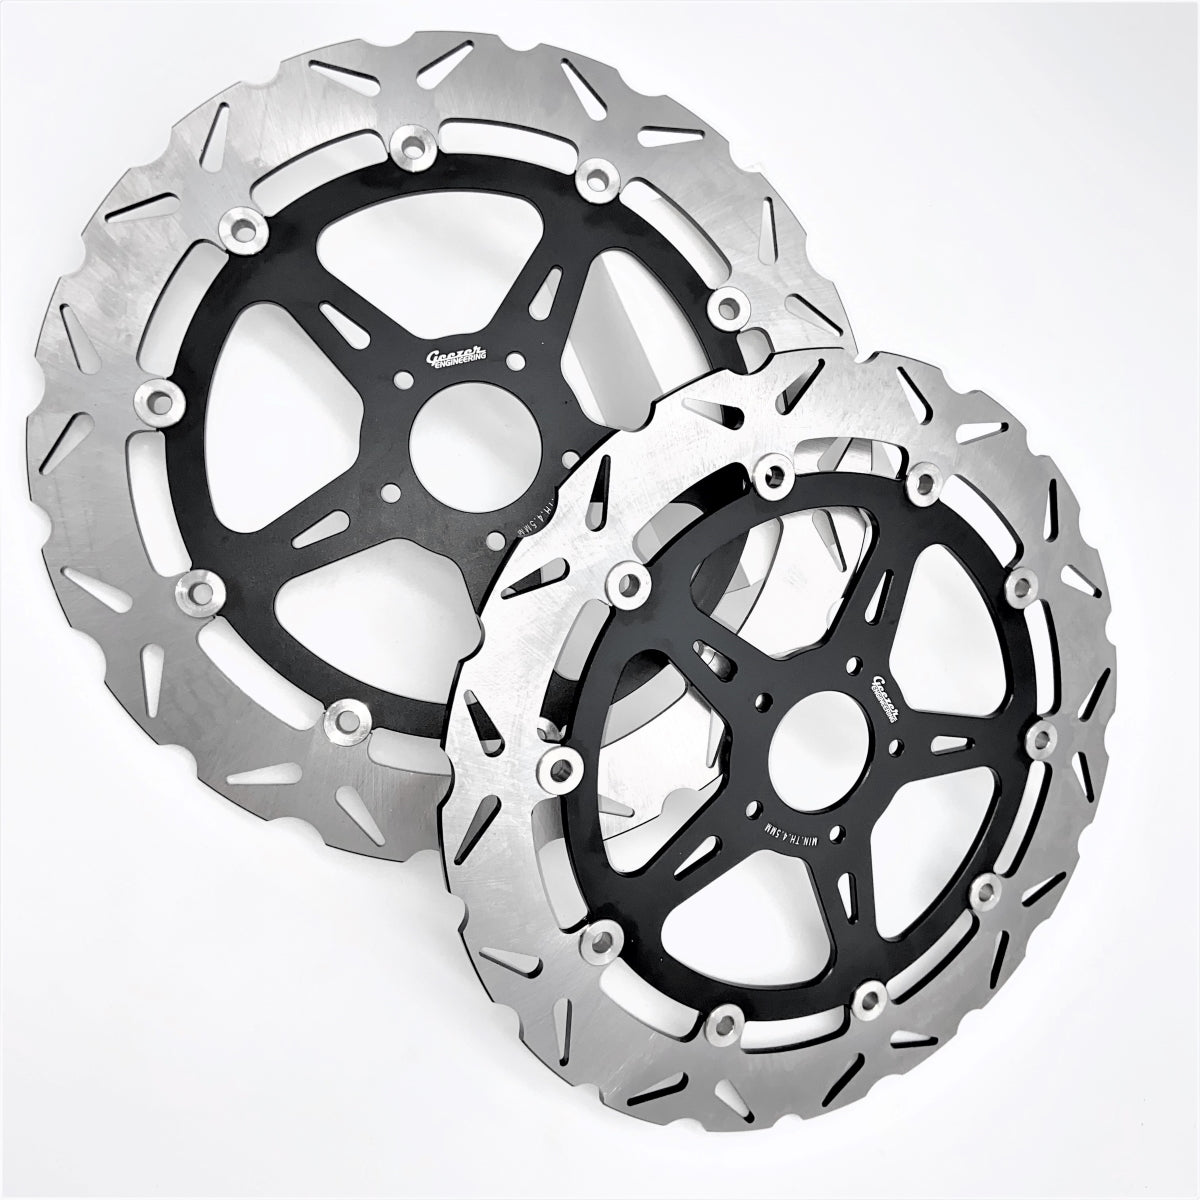 GeezerEngineering 14-inch performance full-floating brake rotors for Harley